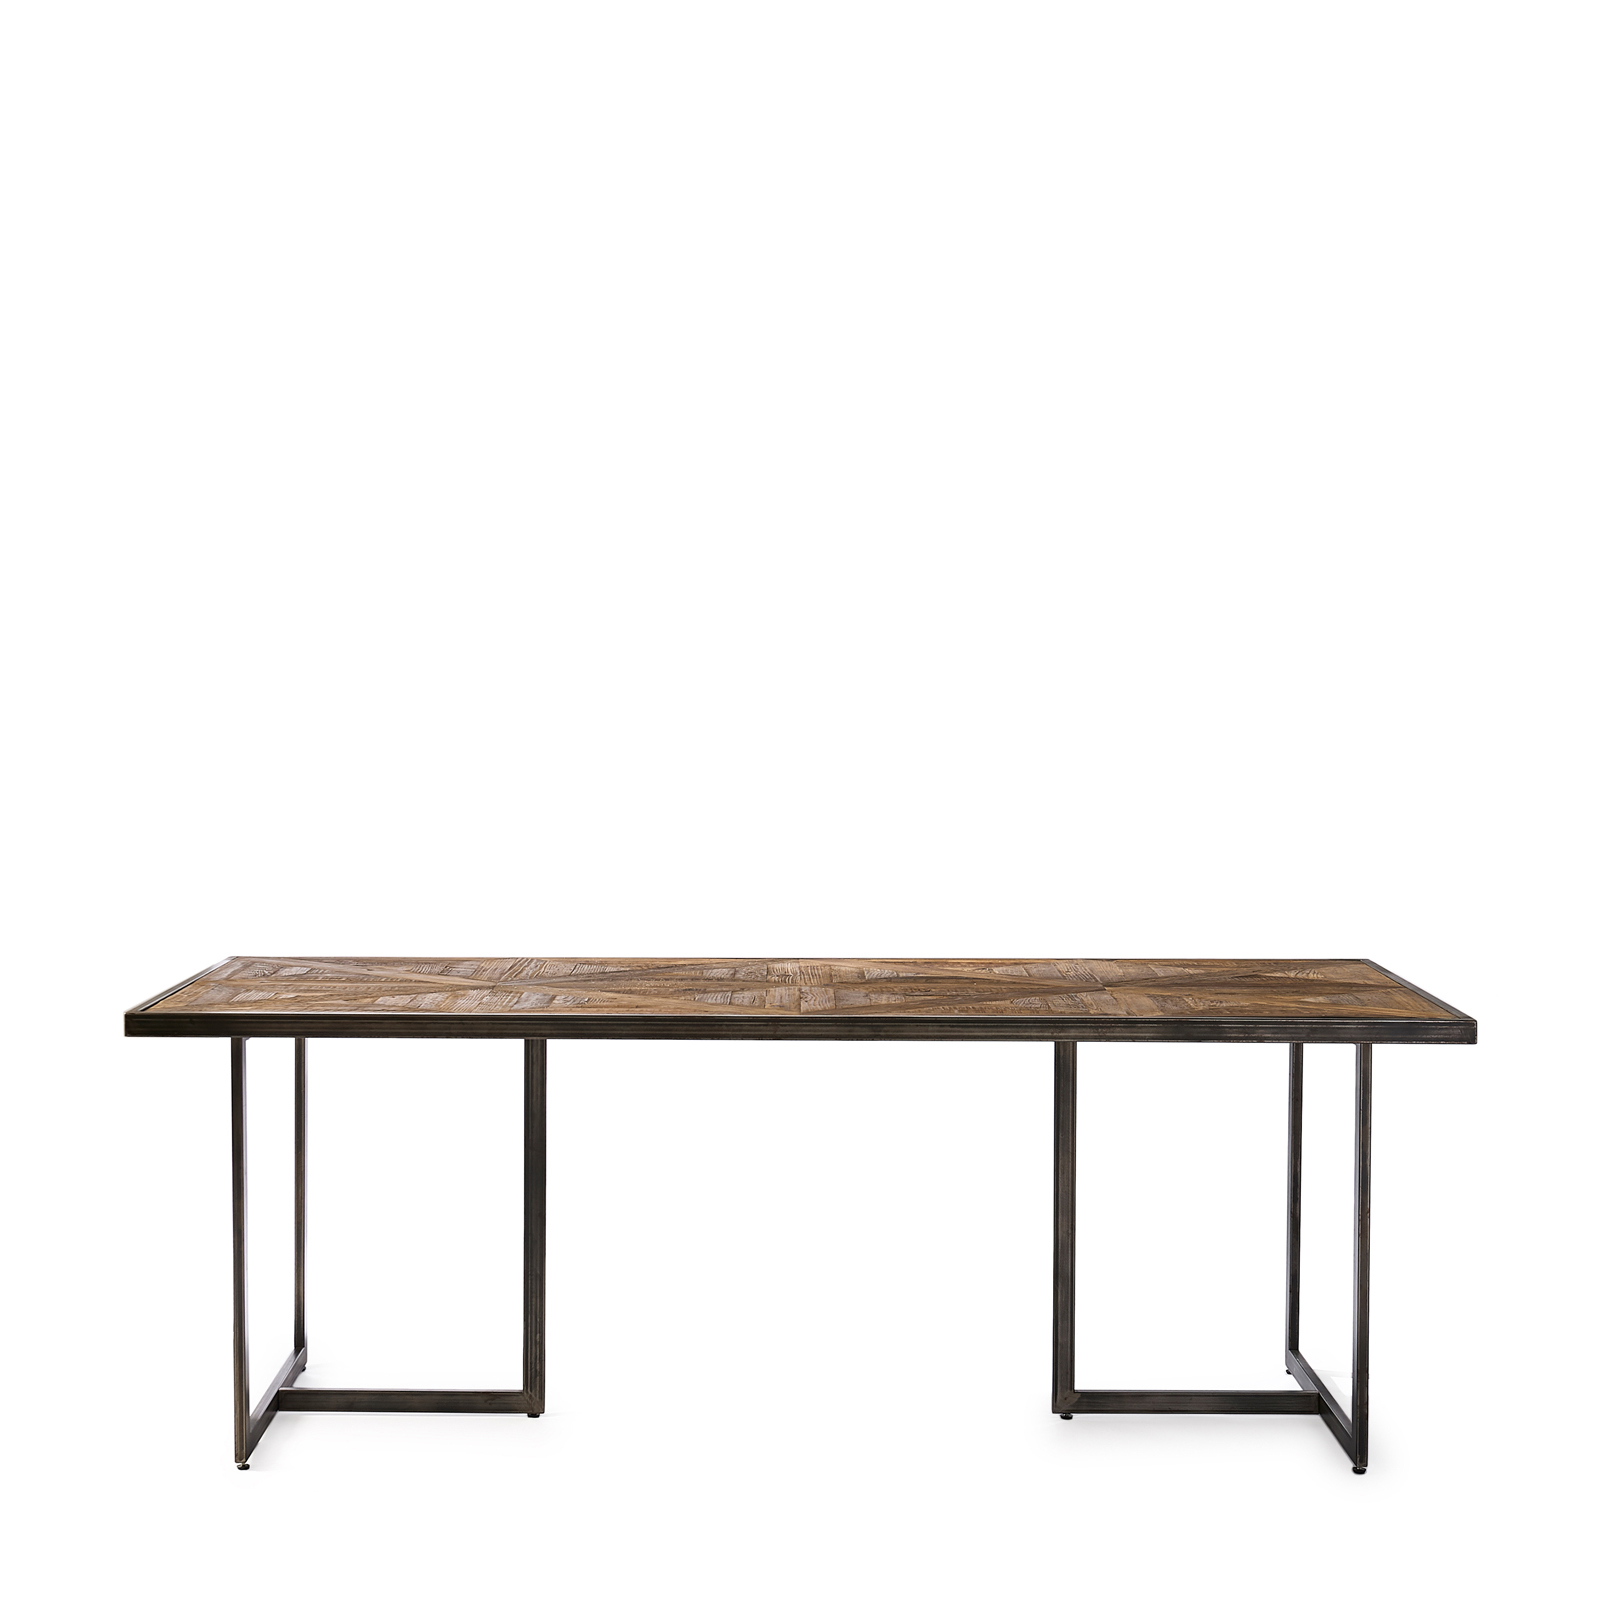 Le Bar American Dining Table, 220x90 cm